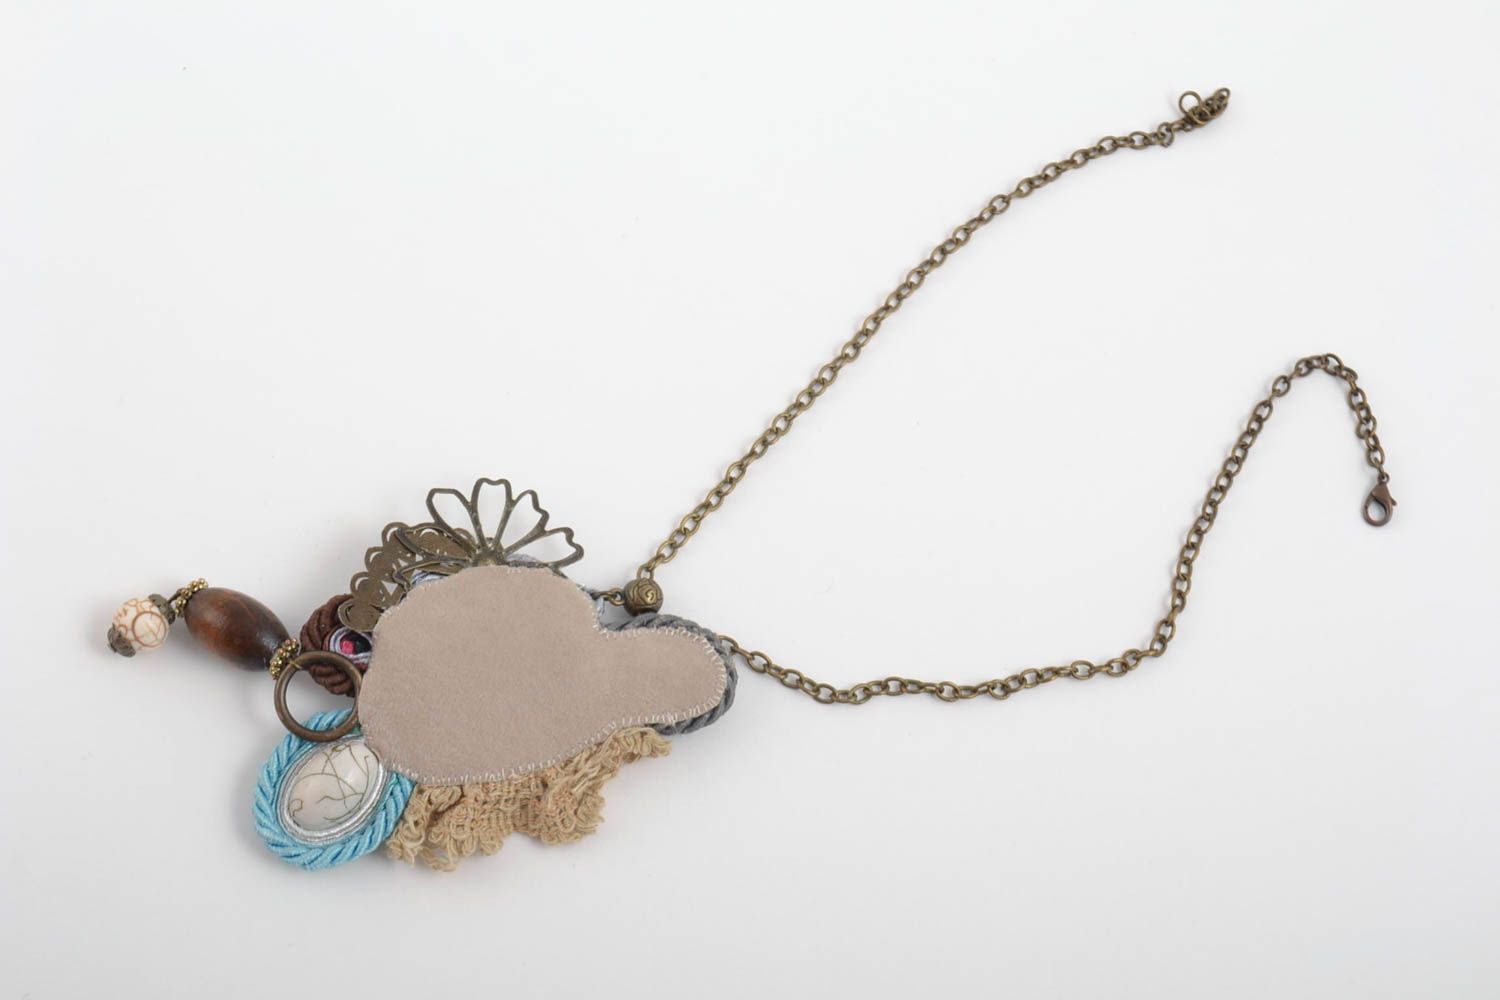 Handmade pendant soutache pendant designer pendant unusual gift for women photo 4